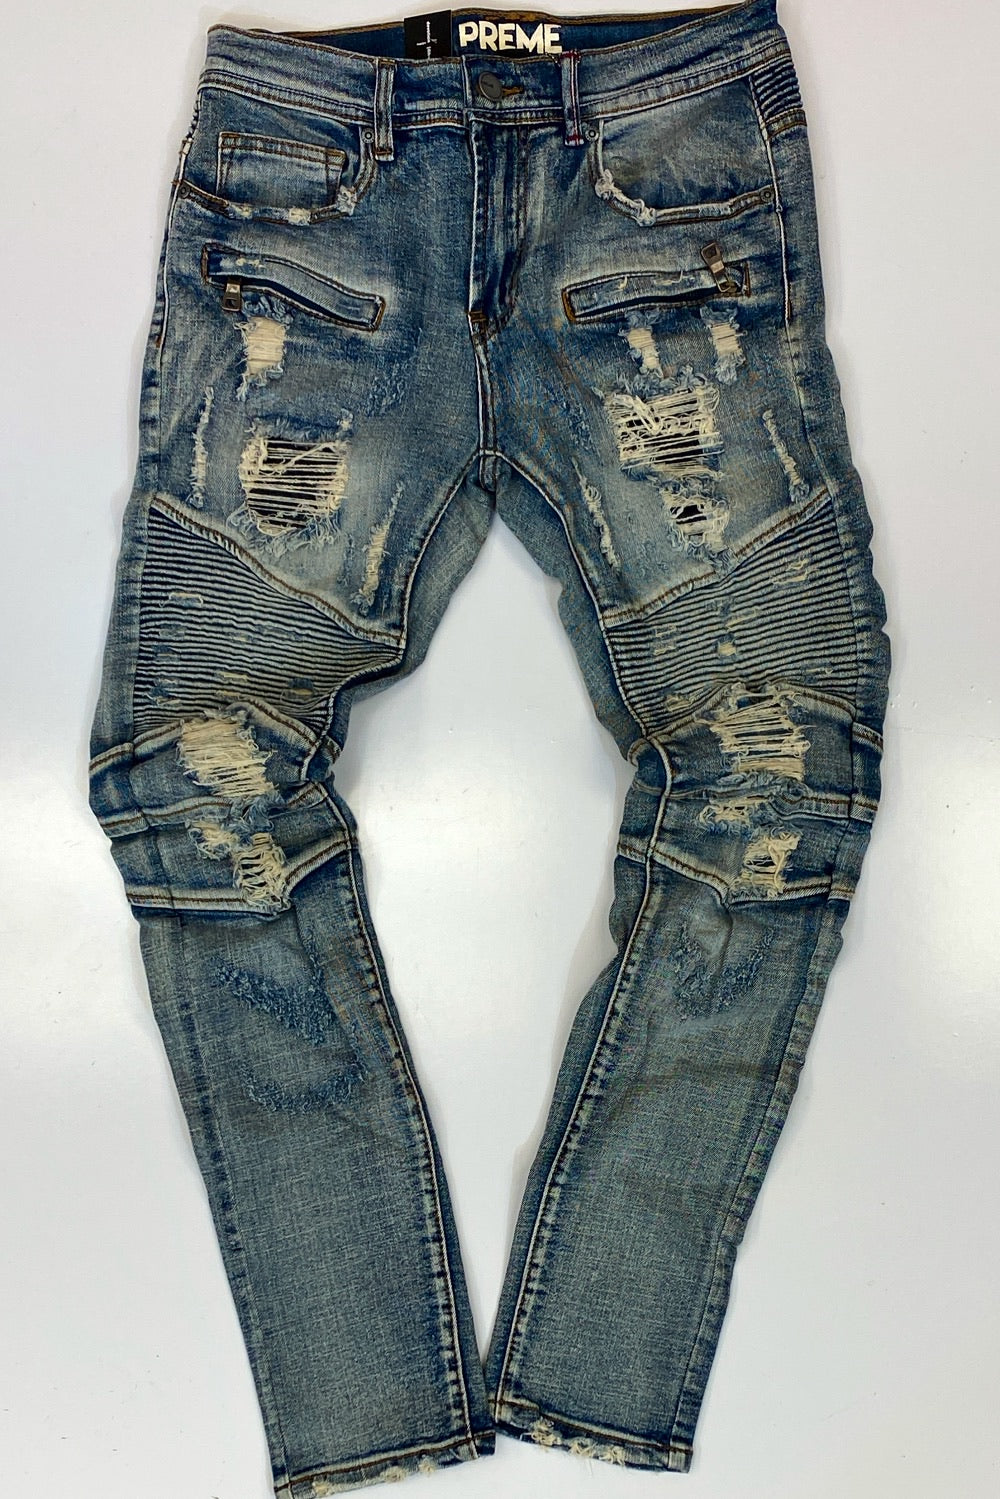 Preme- novelty ripped jeans